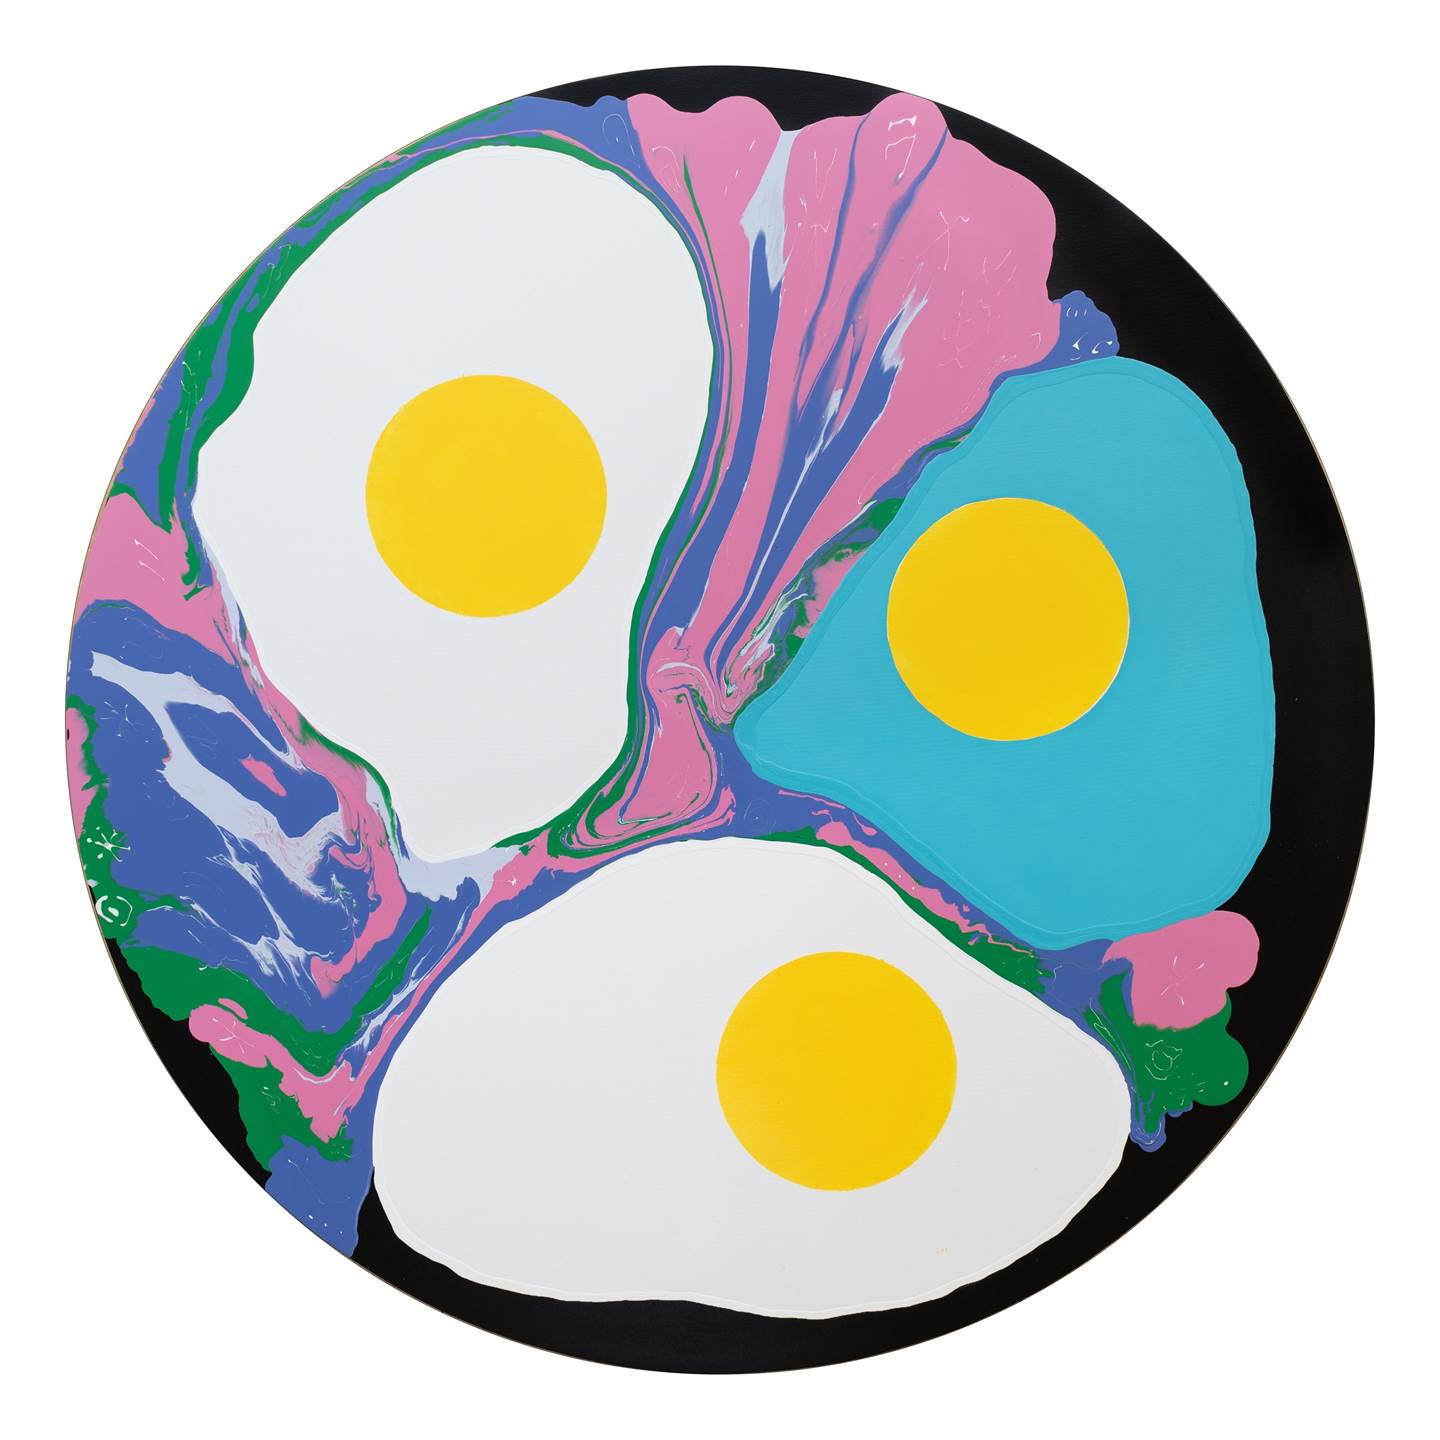 Fried eggs in special character sauce #9, original   La peinture par Mario Louro